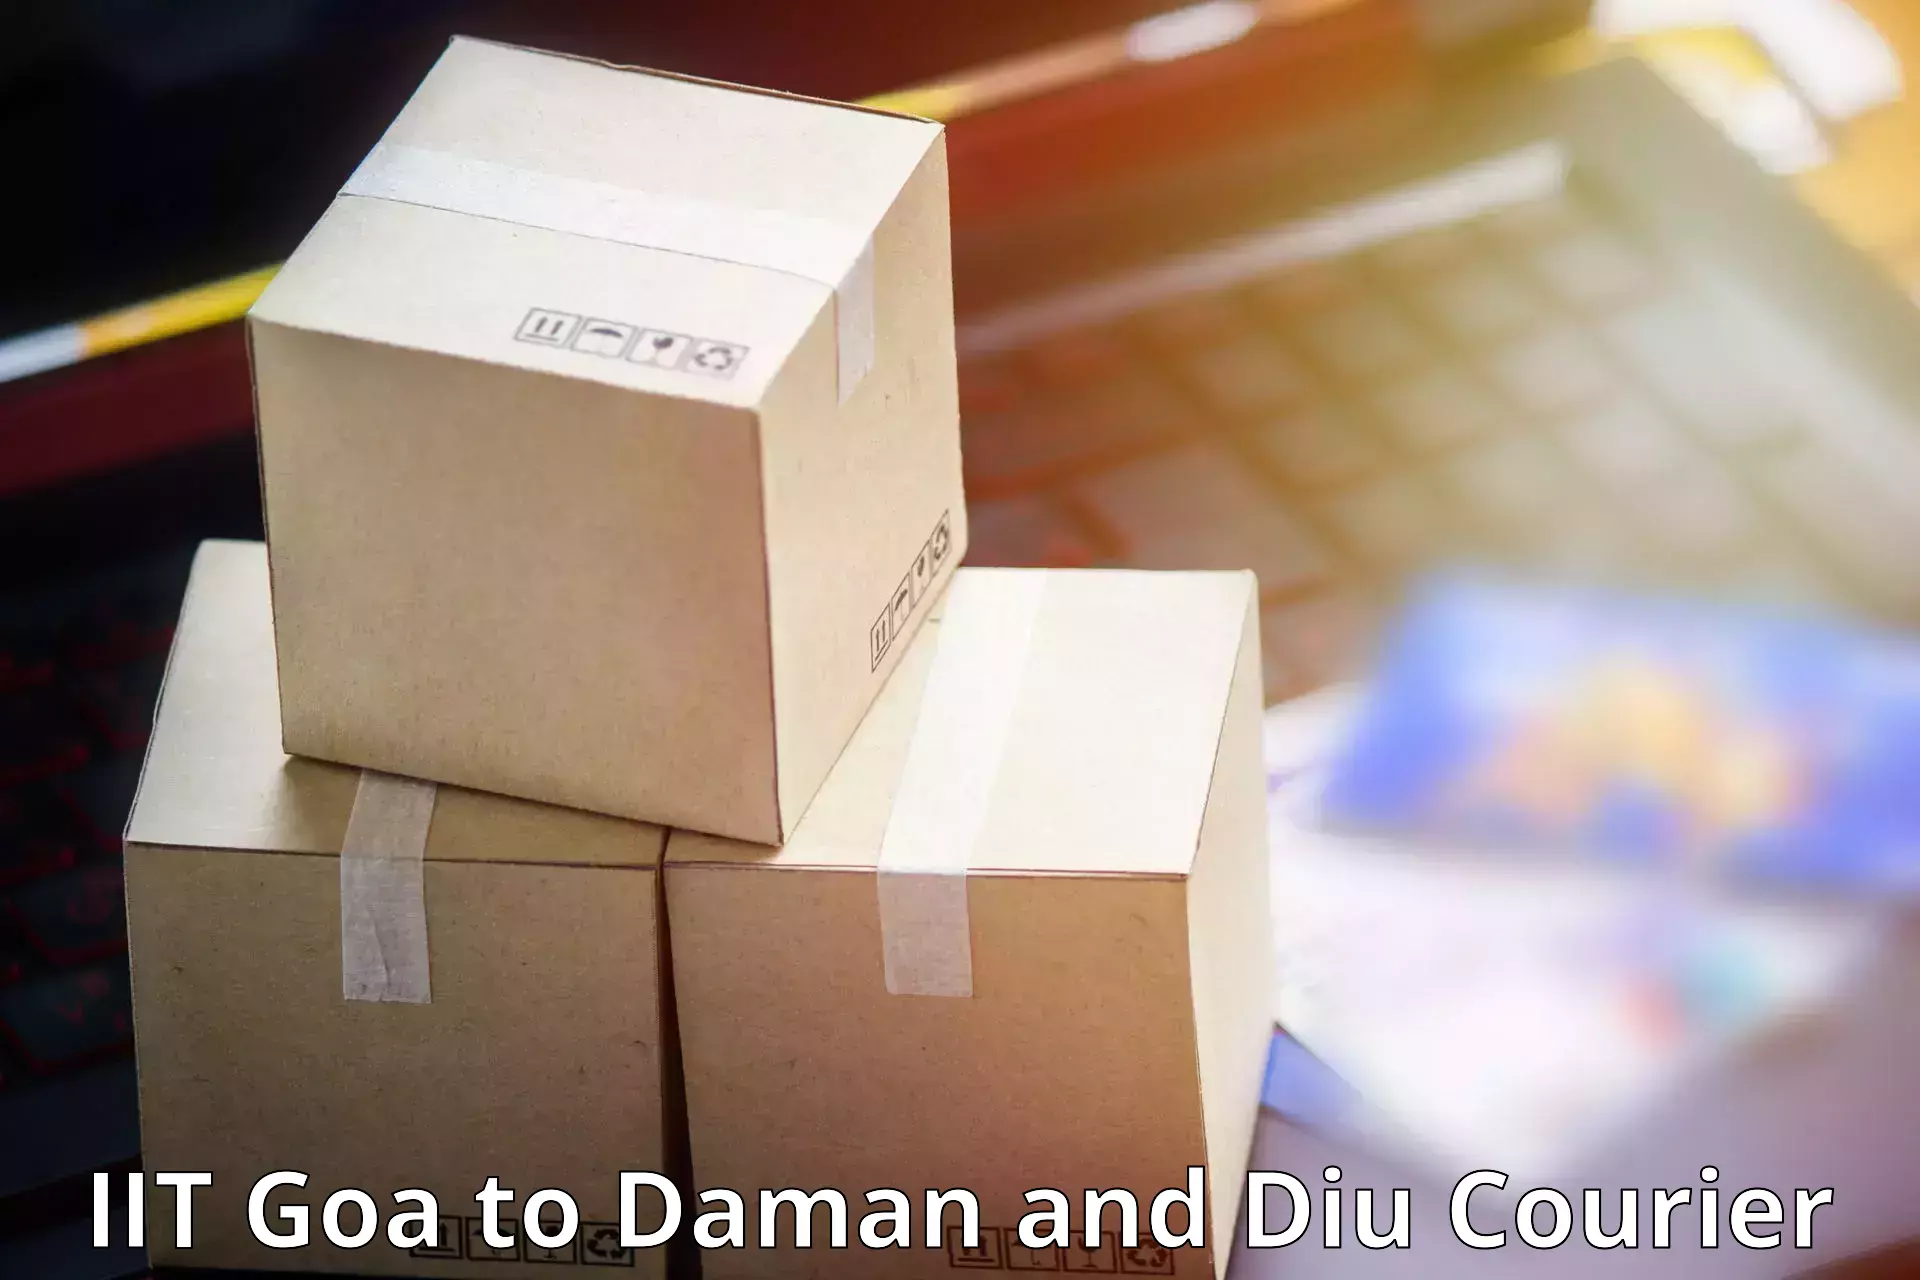 Courier service efficiency IIT Goa to Daman